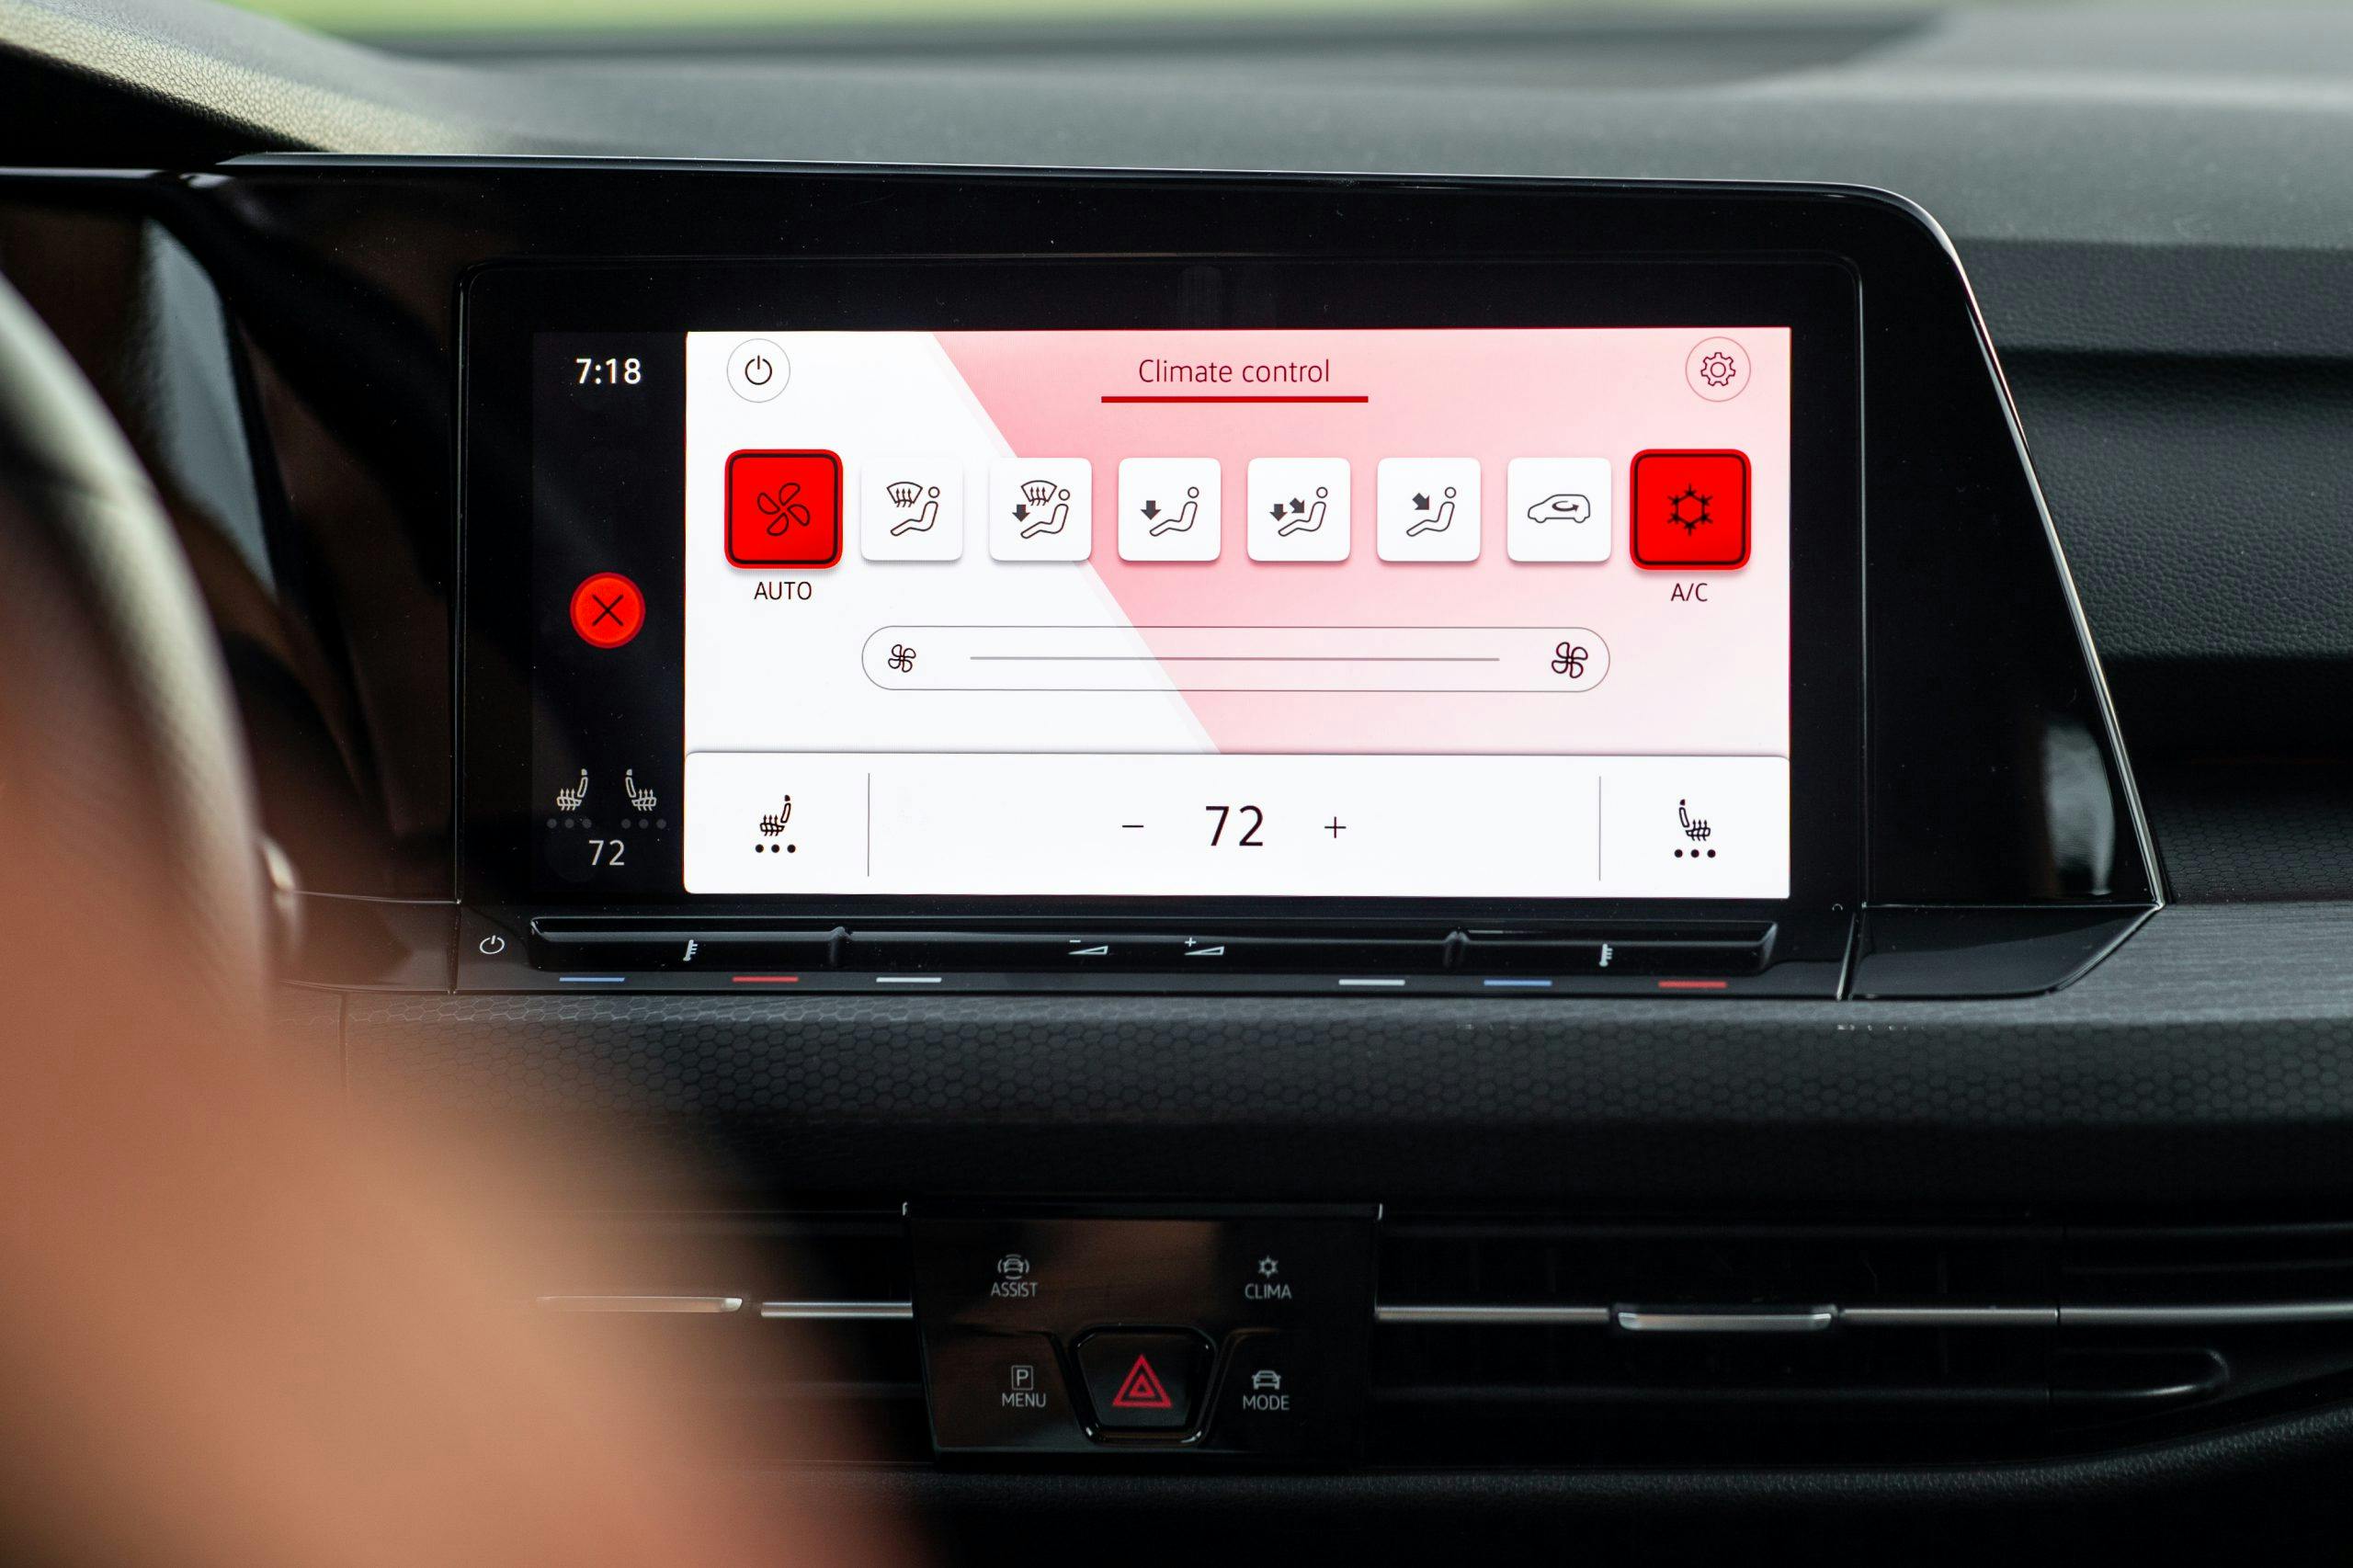 2022 VW GTI mk8 interior infotainment screen